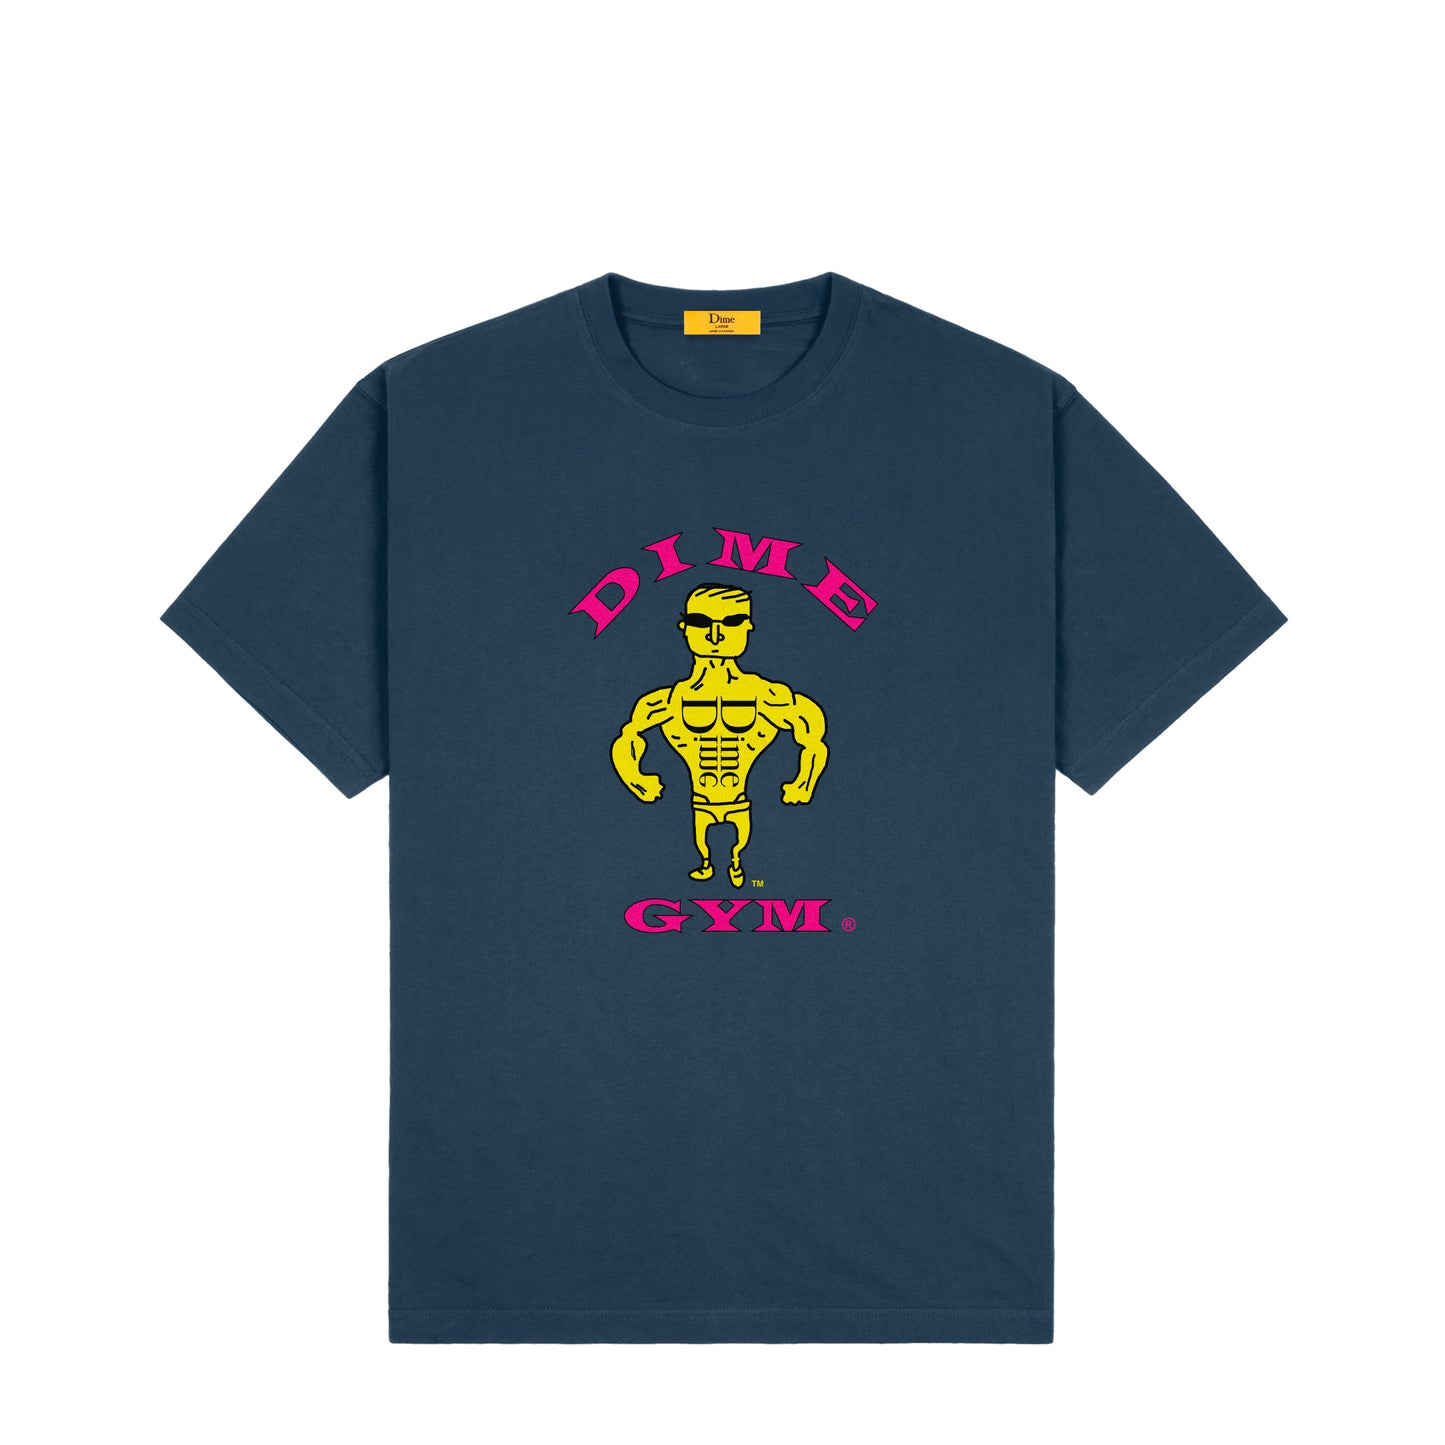 Buff S/S Tee Shirt Indigo(size options listed)